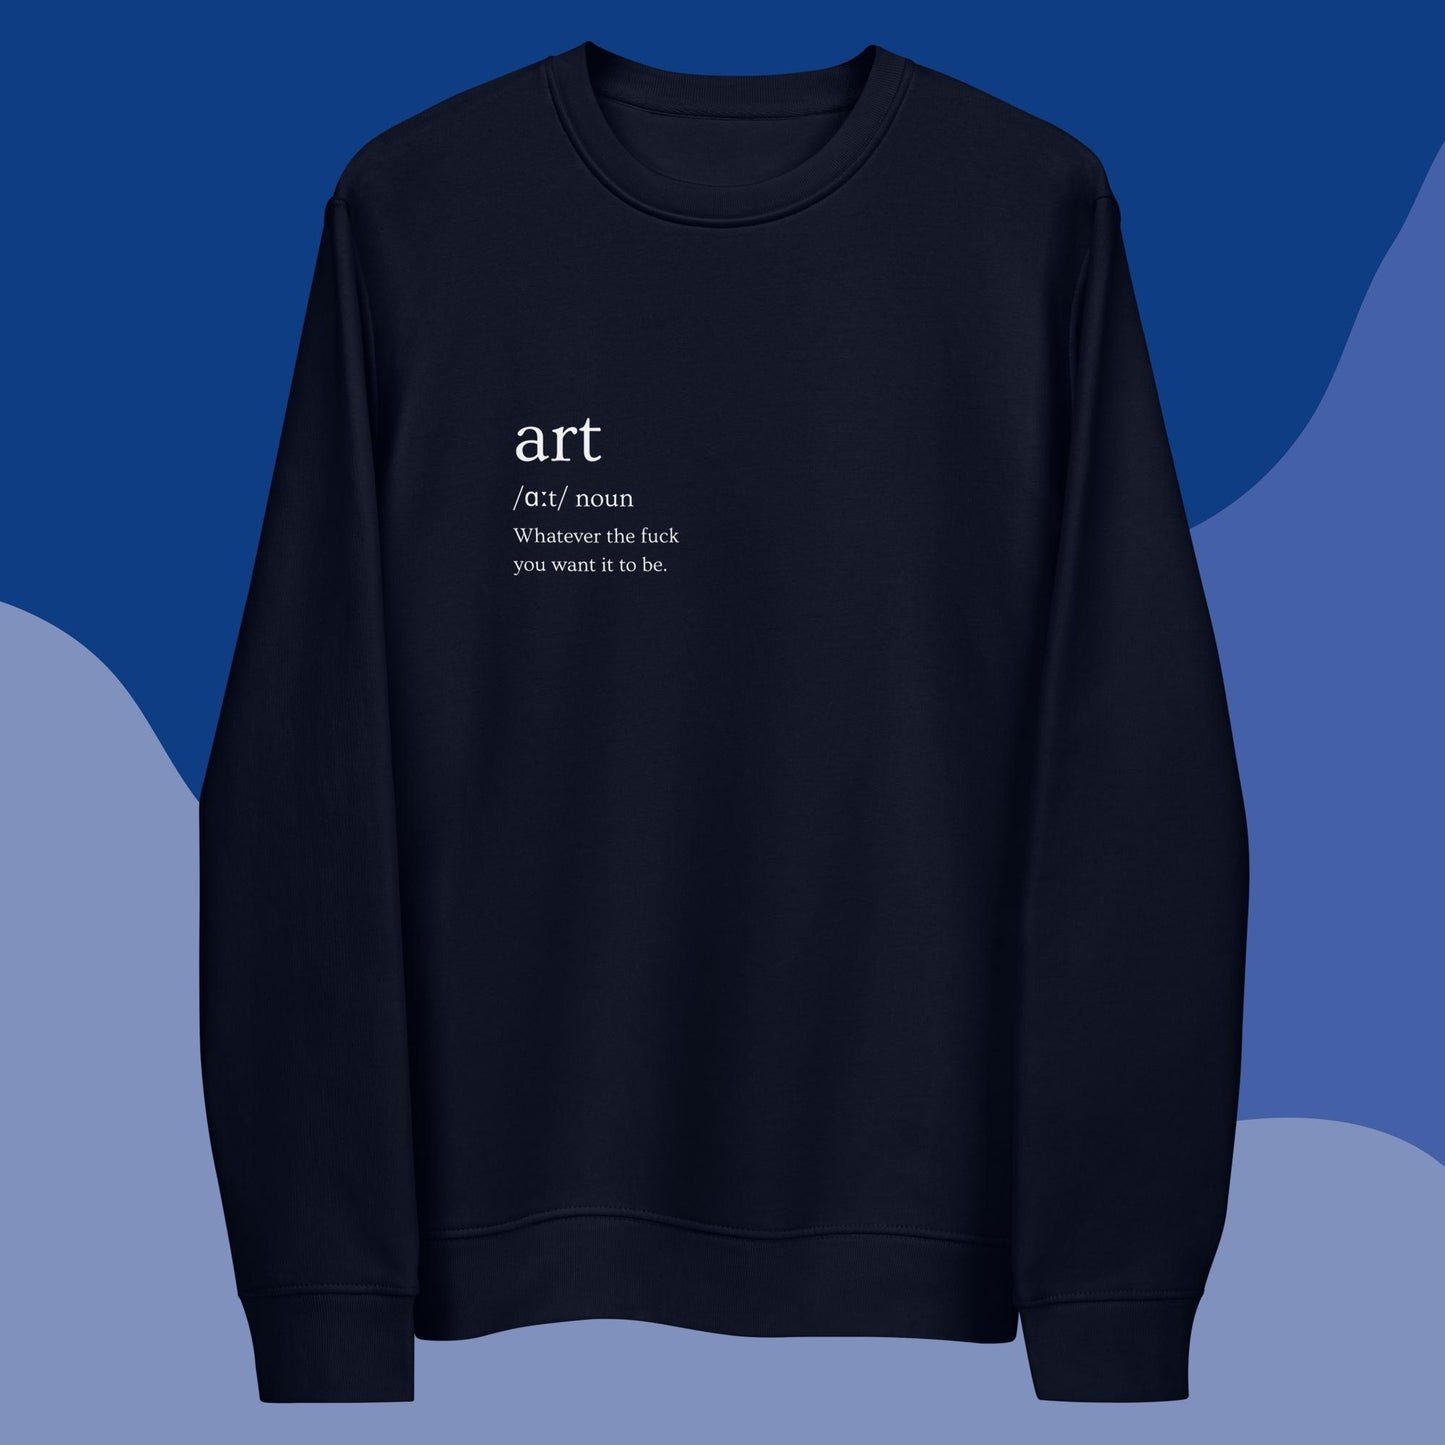 ART sweatshirt